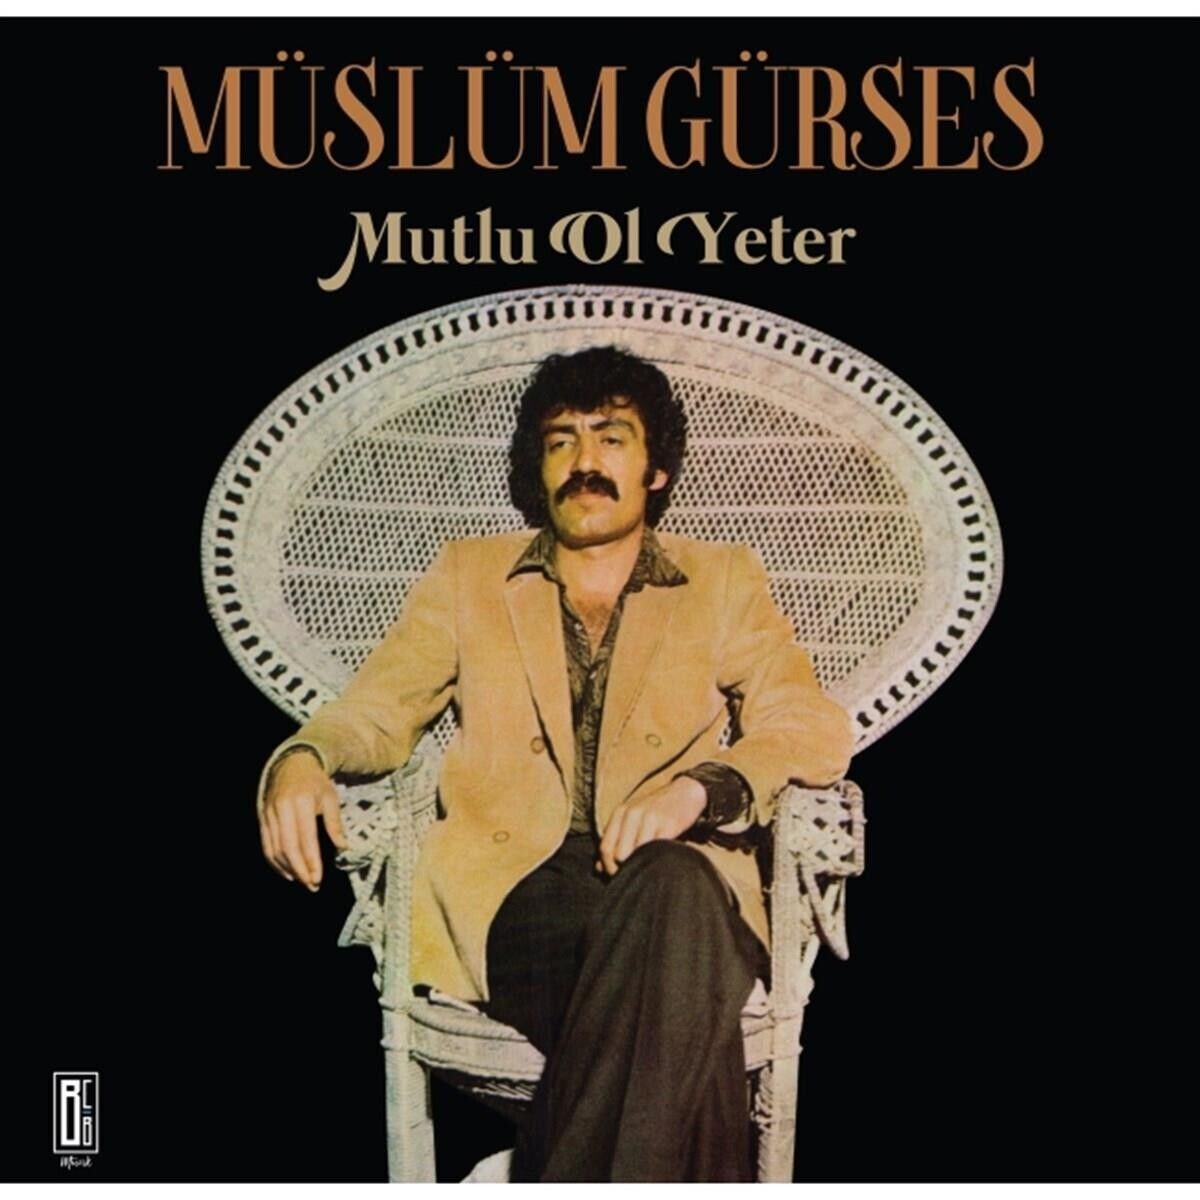 Müslüm Gürses – Mutlu Ol Yeter (2017) LP (Vinyl Record) Turkish Music "New"